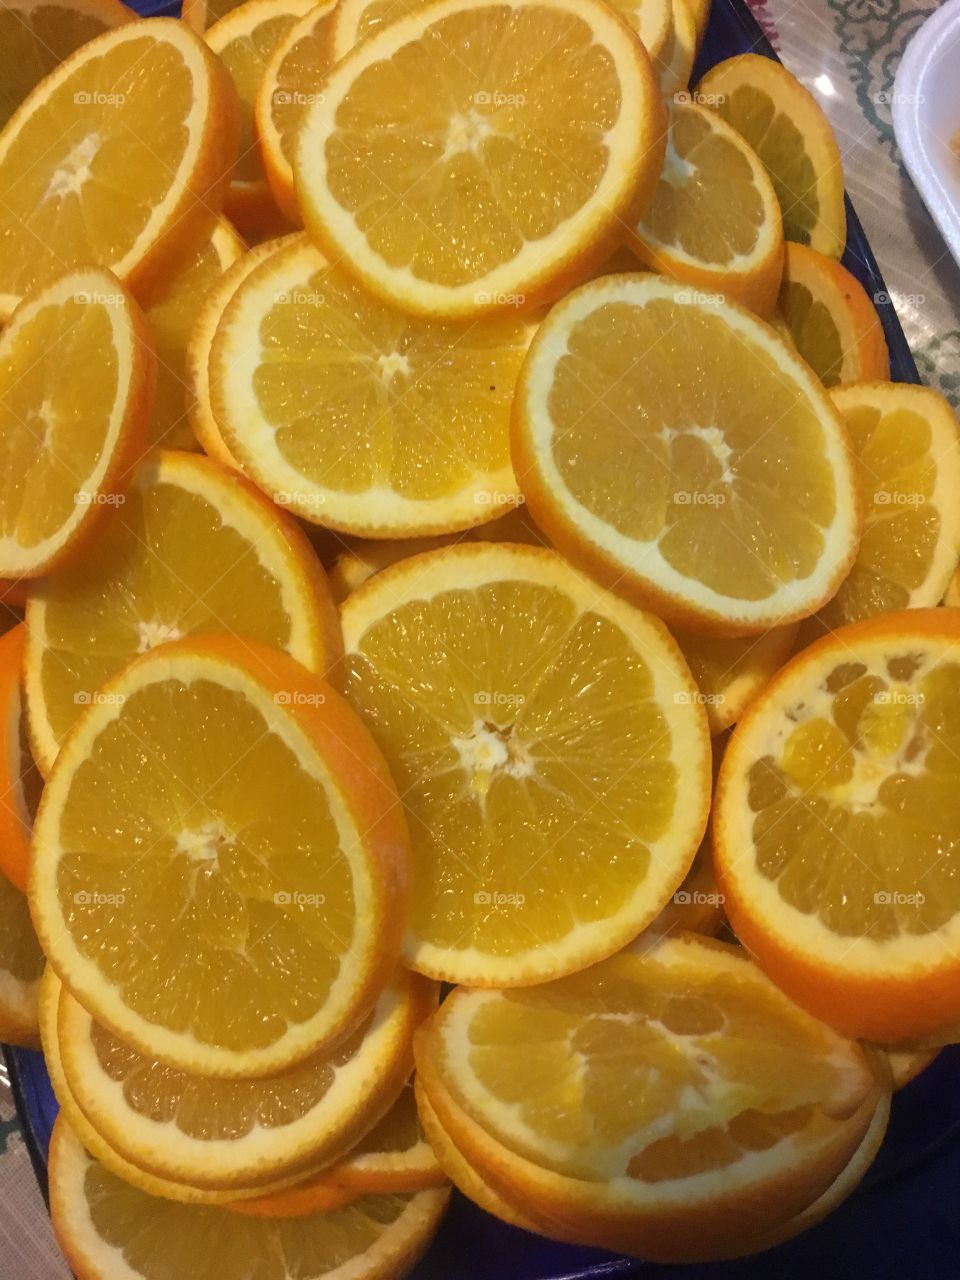 Ricas naranjas
